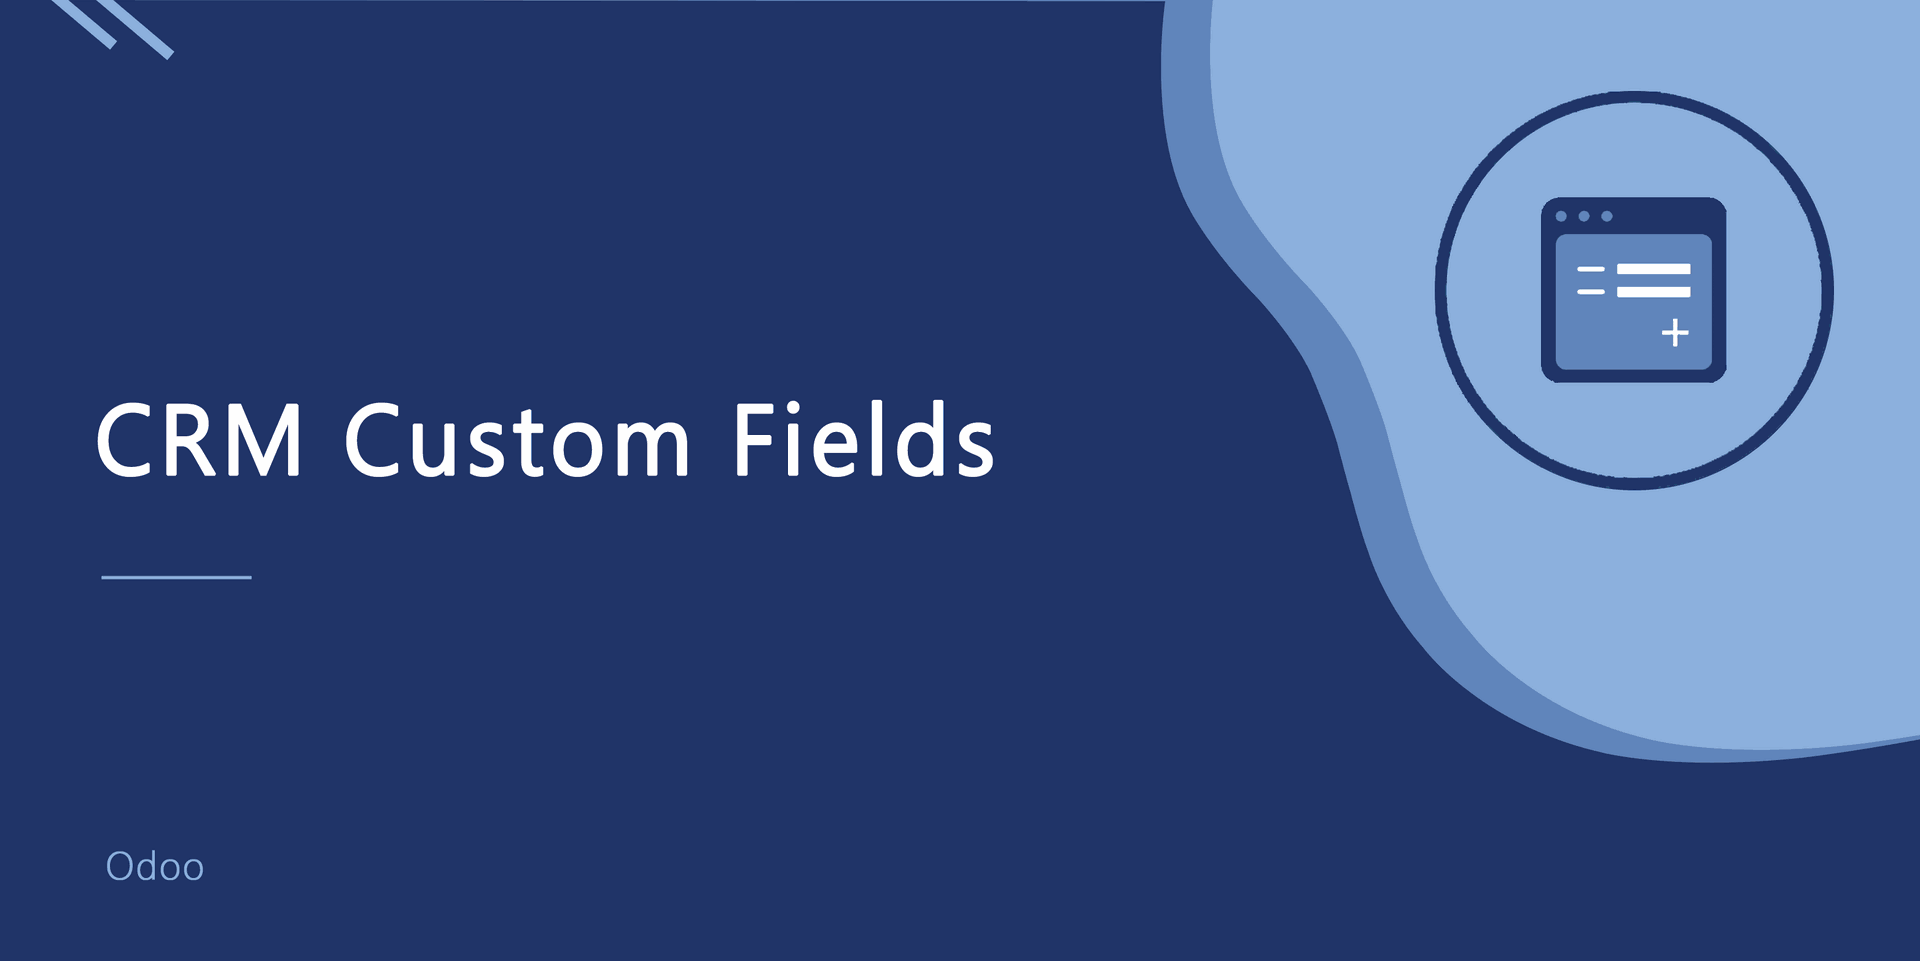 CRM Custom Fields